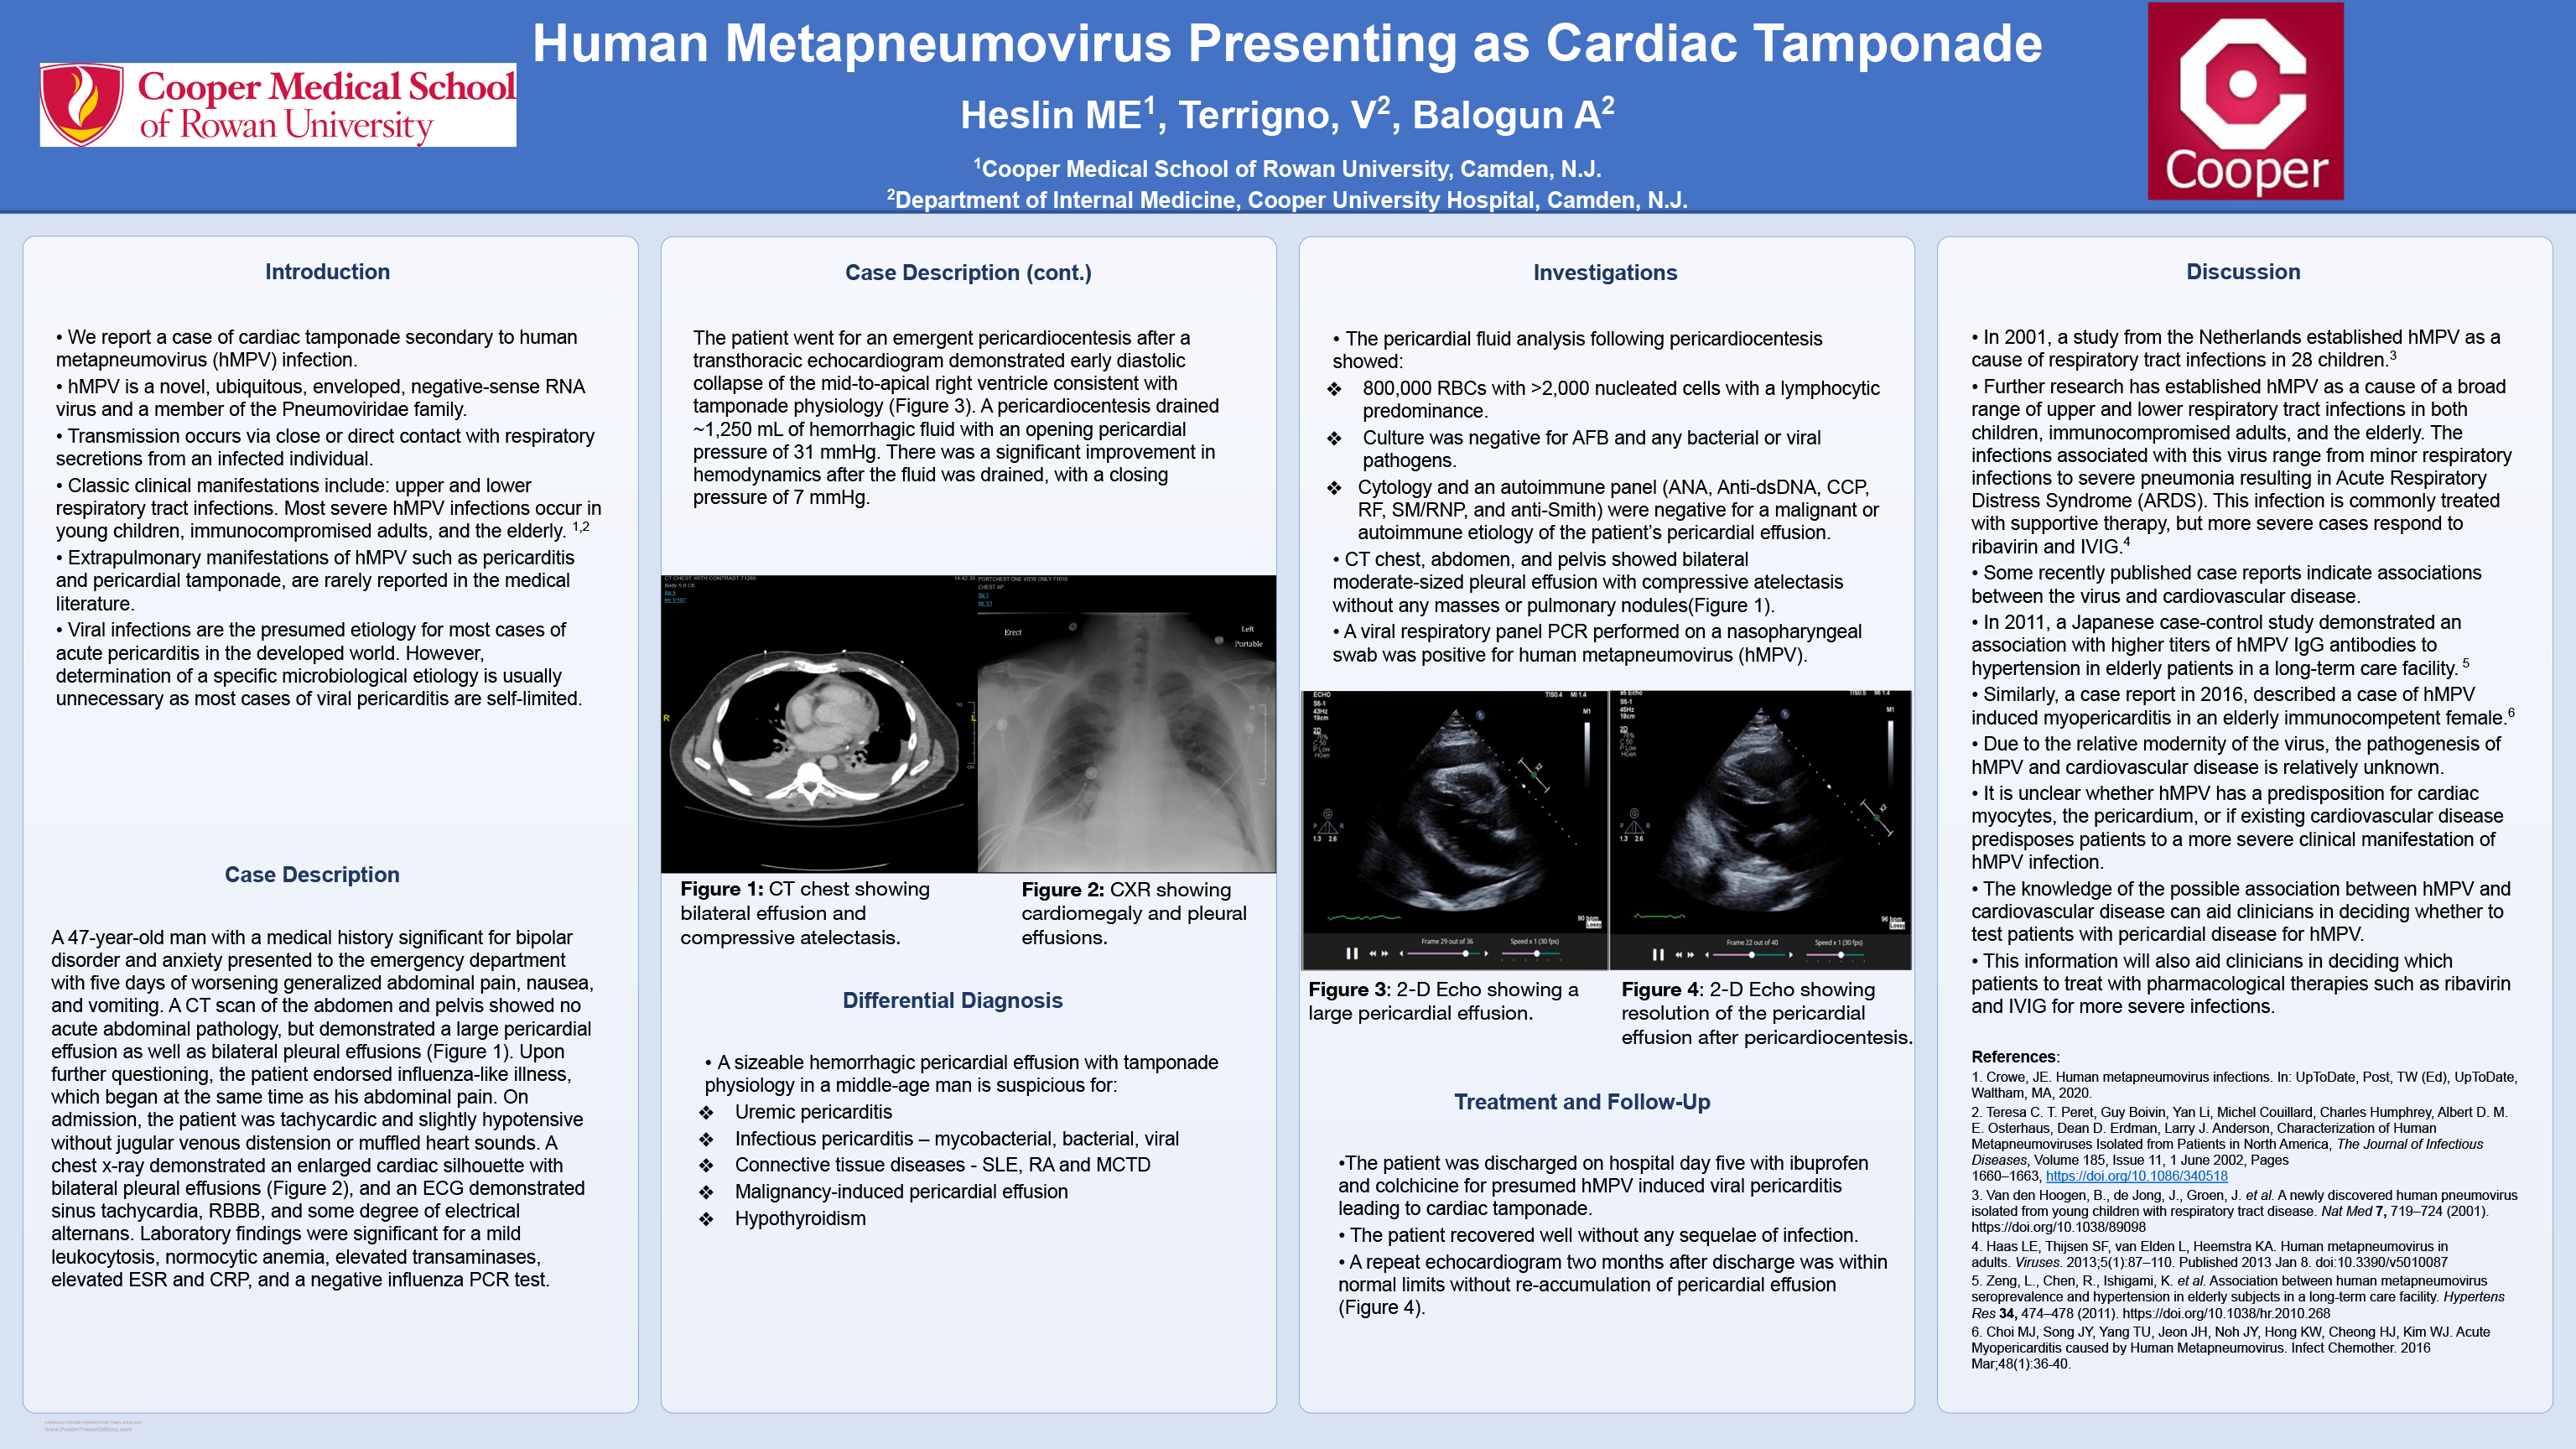 12-CV-4-Human Metapneumovirus presenting as cardiac tamponade in a 47-year-old immunocompetent male